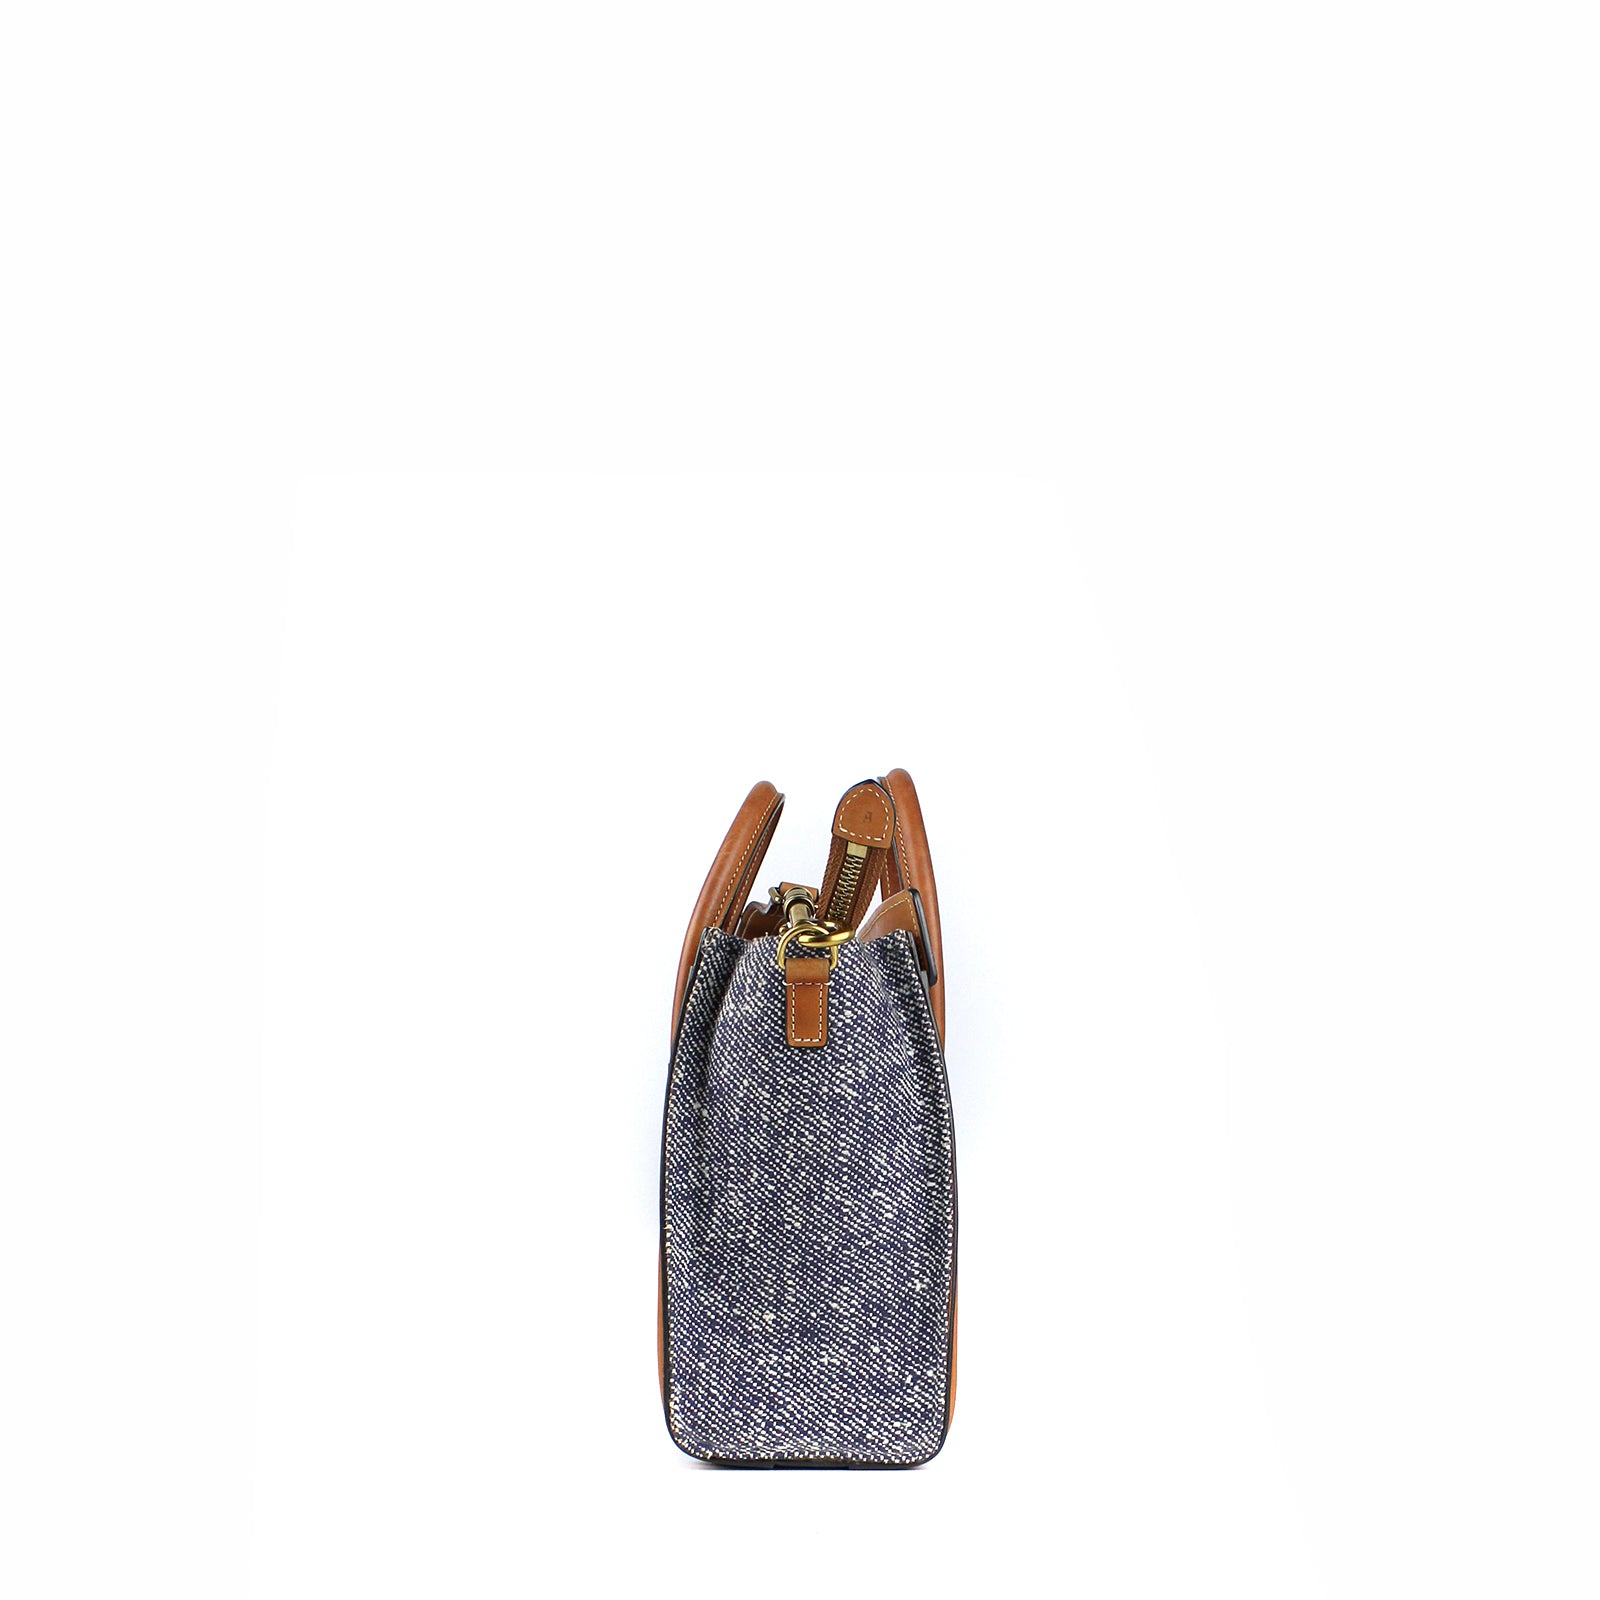 CELINE - Sac Luggage nano en toile et cuir